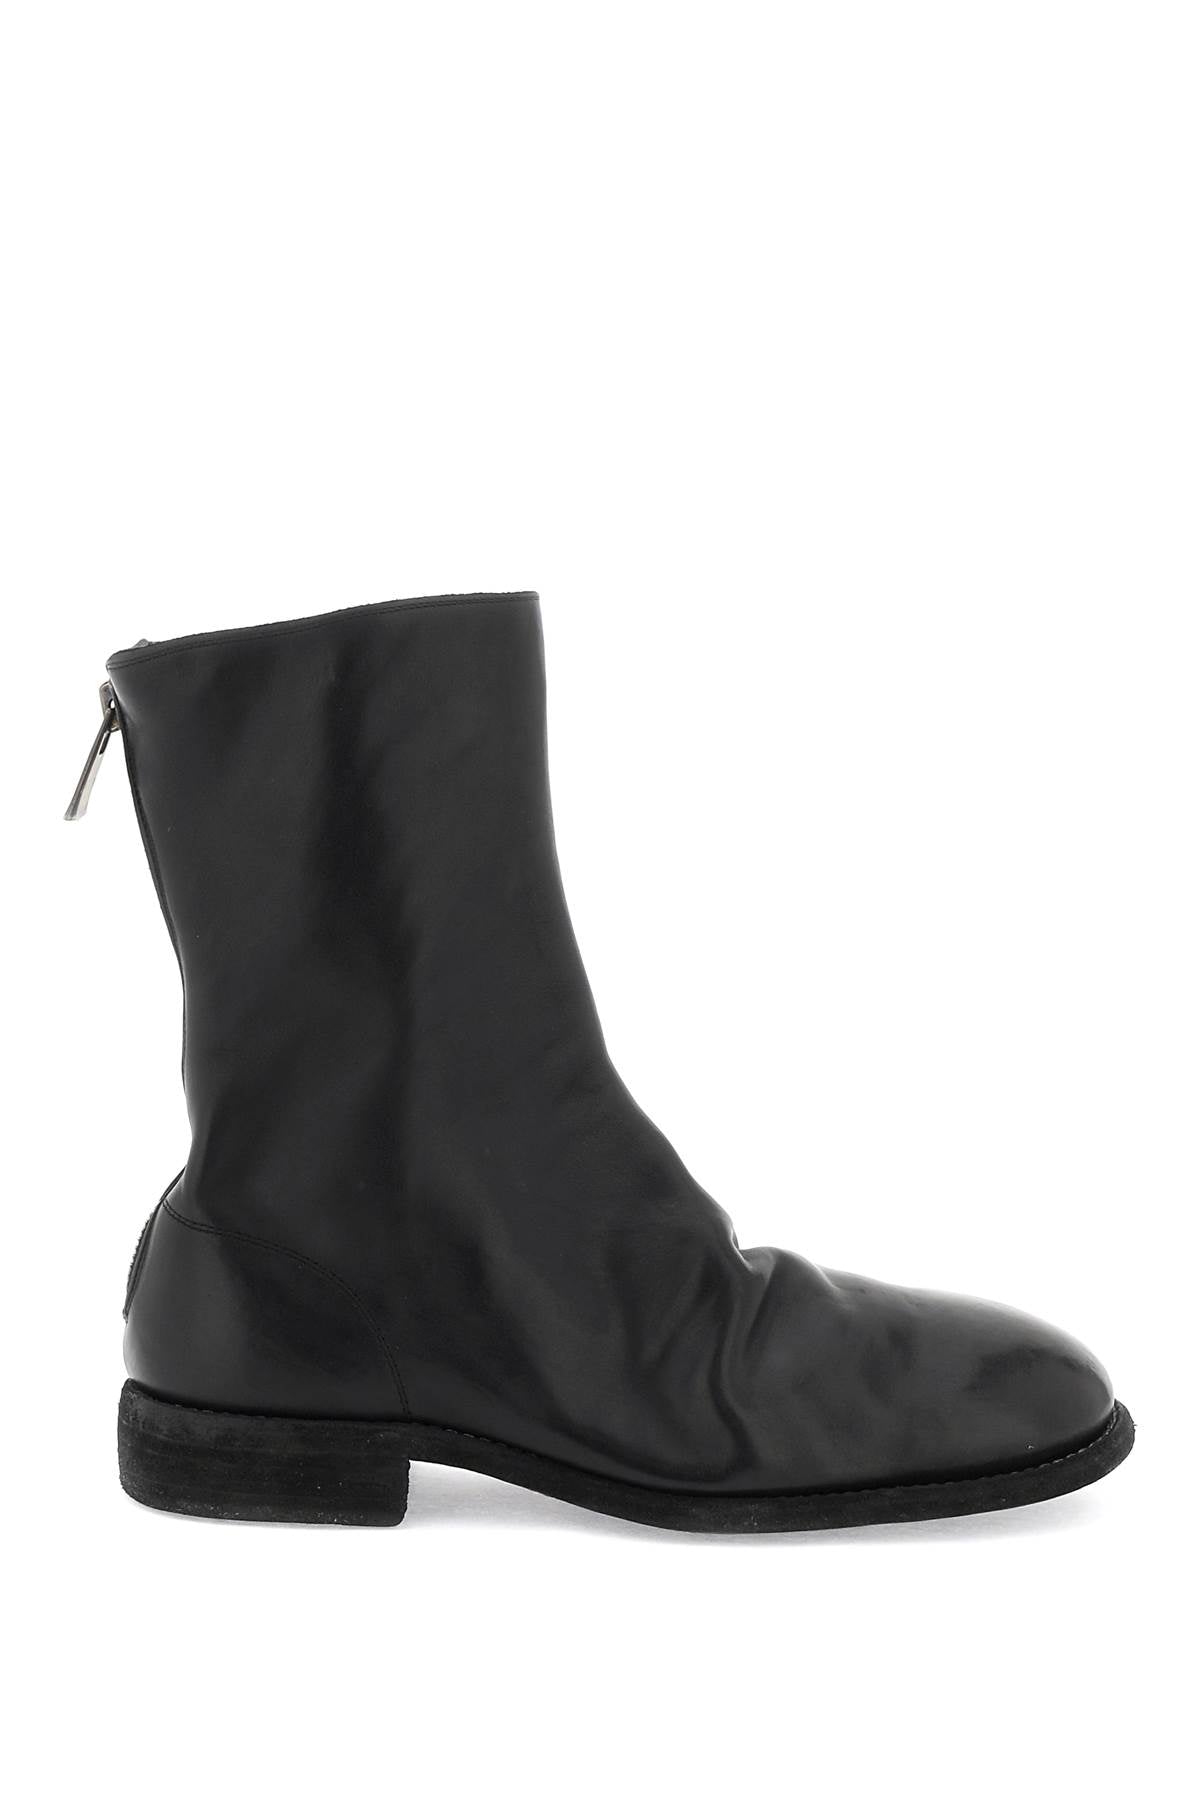 Guidi Leather Boots   Black